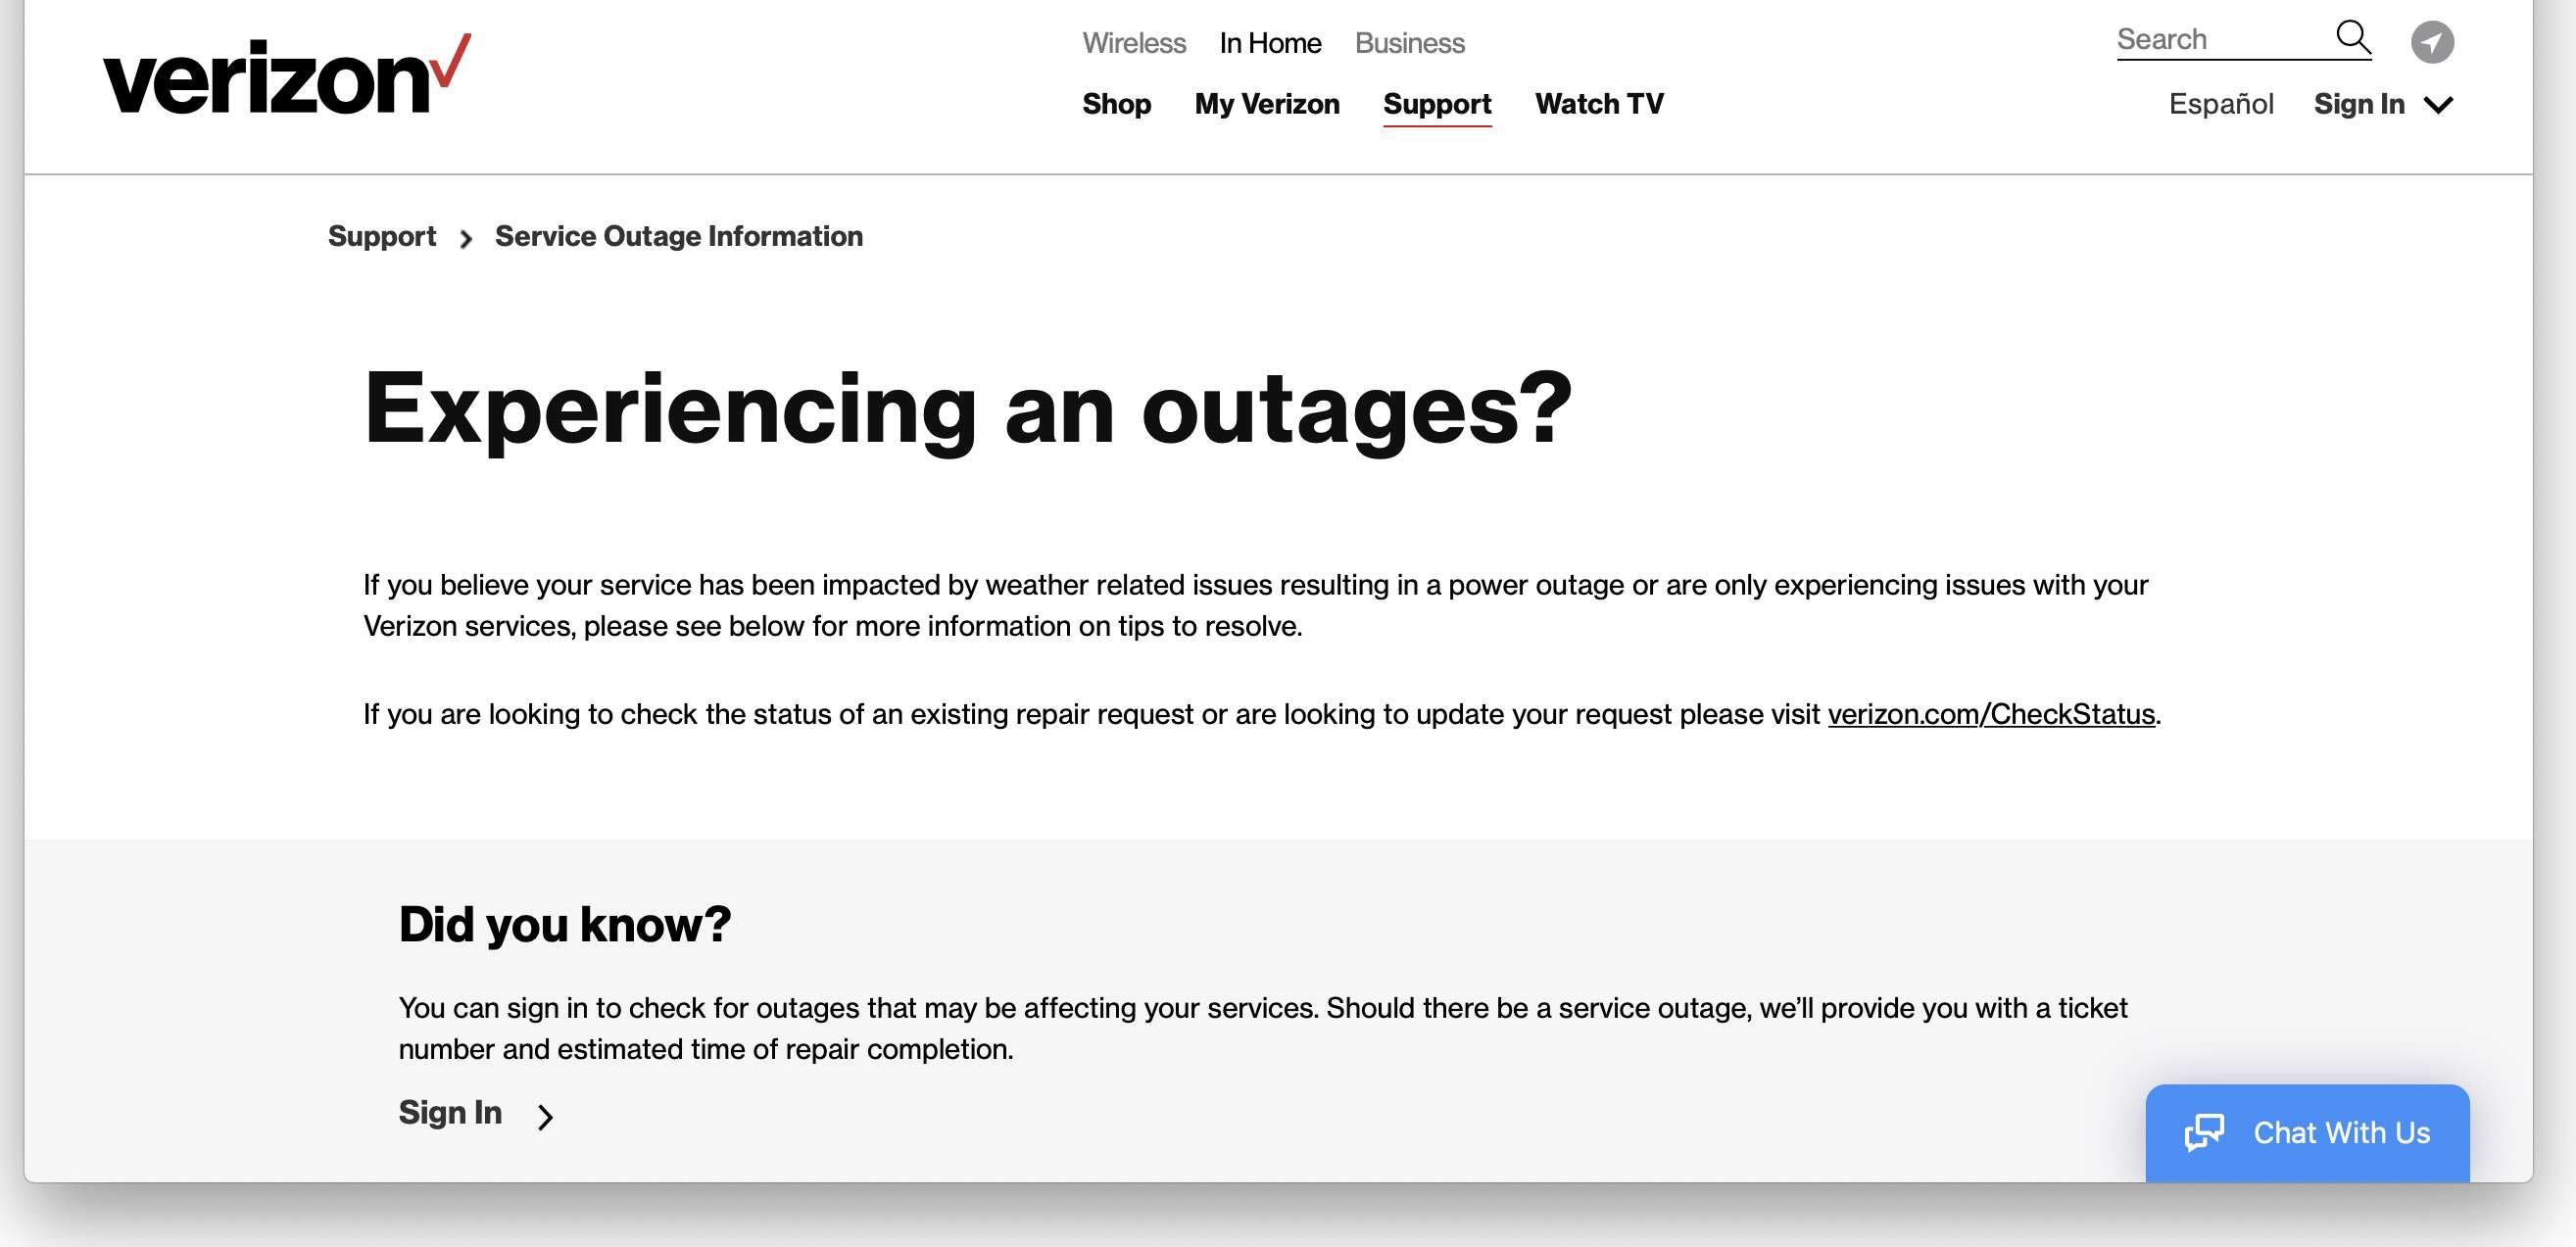 Verizon Service Outage information webbplats